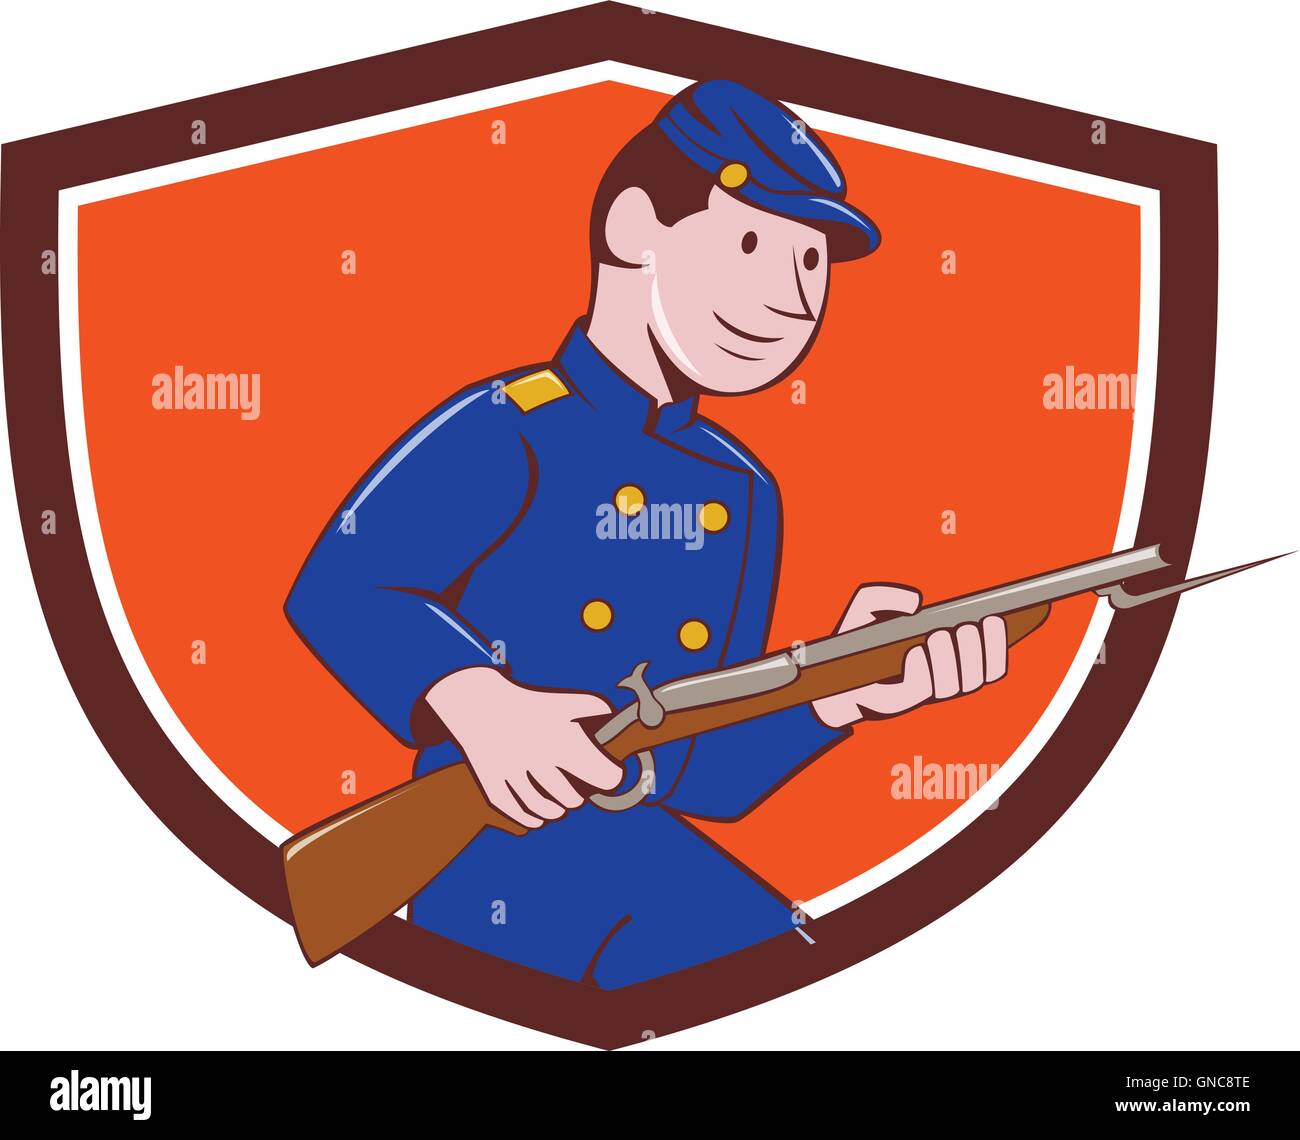 Unions-Armee Soldat Bajonett Gewehr Crest Cartoon Stock Vektor